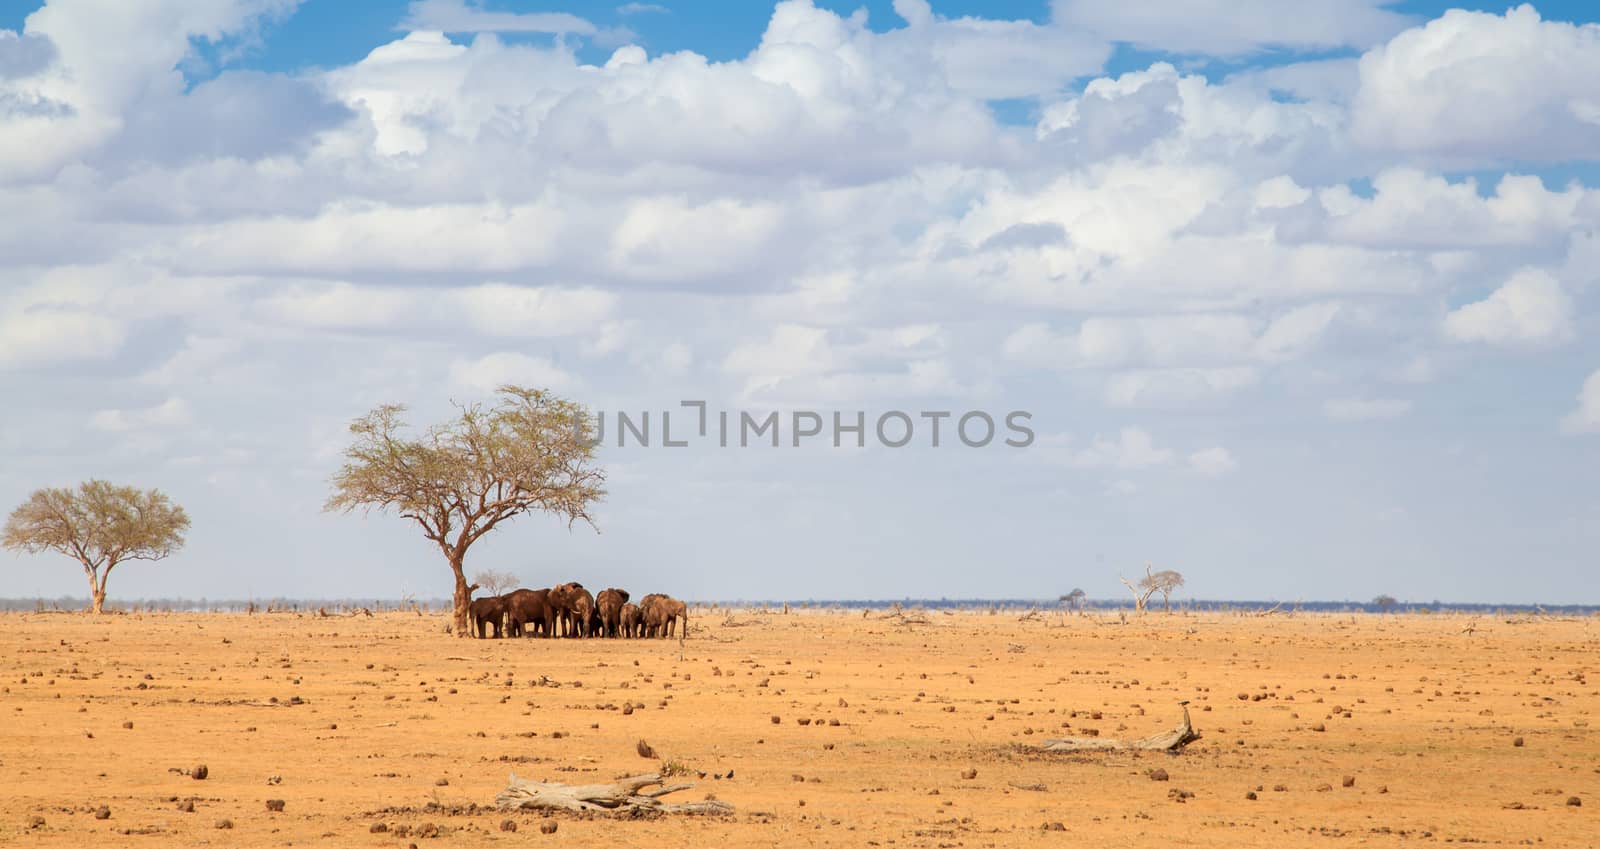 A lot of elephants standing under a big tree, on safari in Kenya